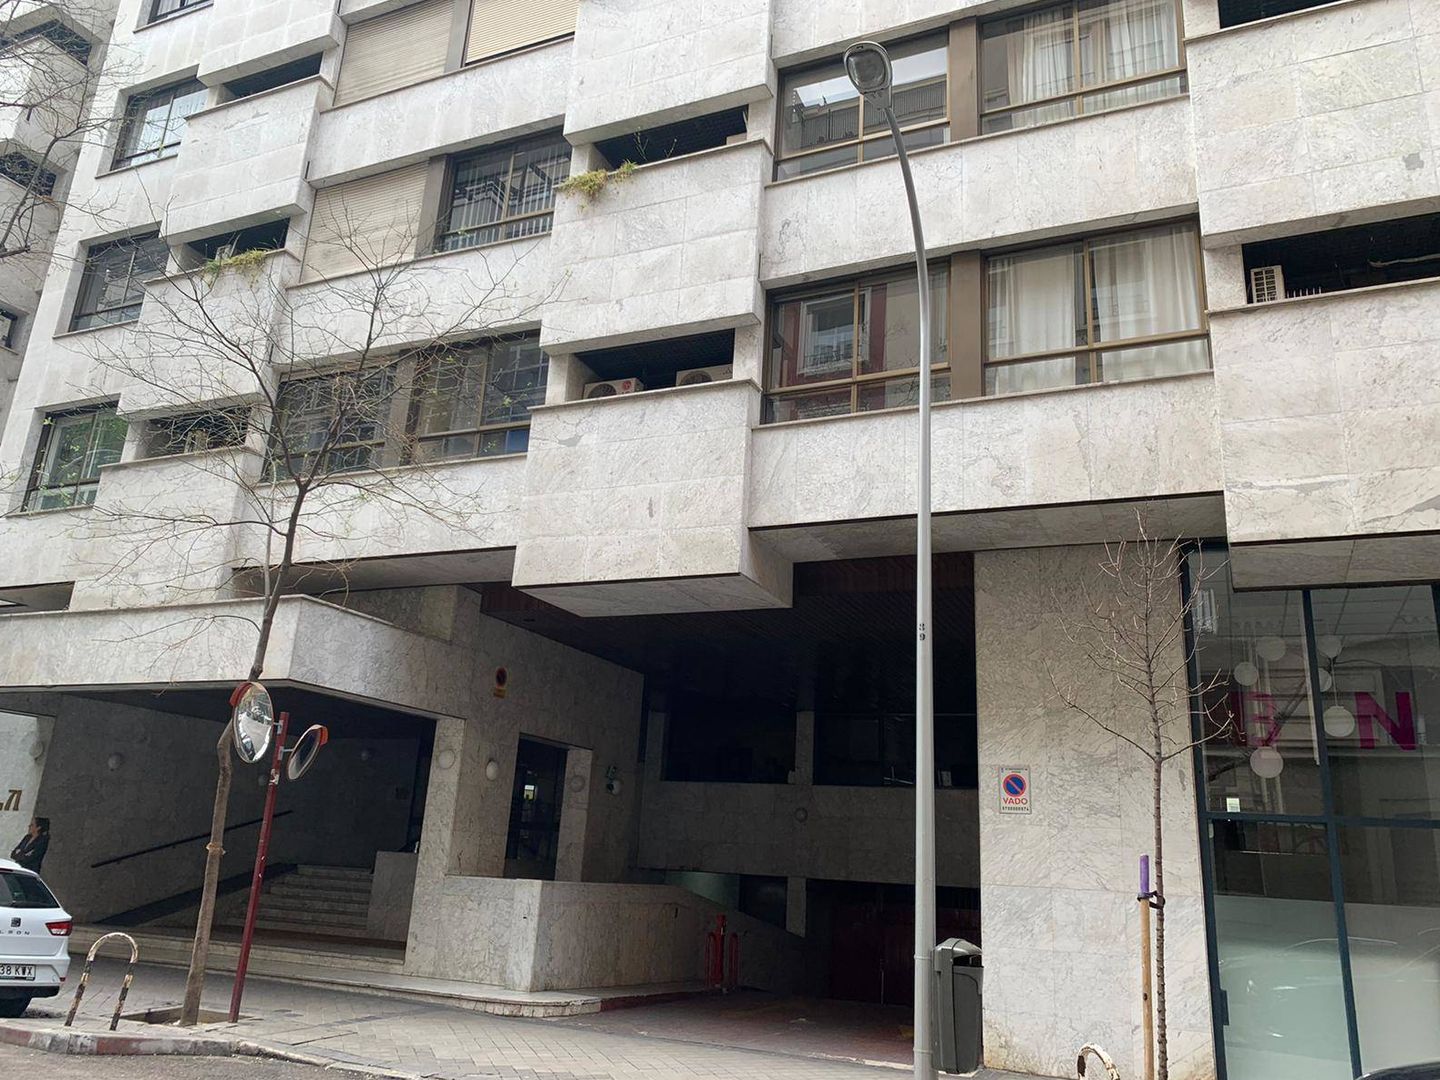 Edificio de viviendas en Almagro.